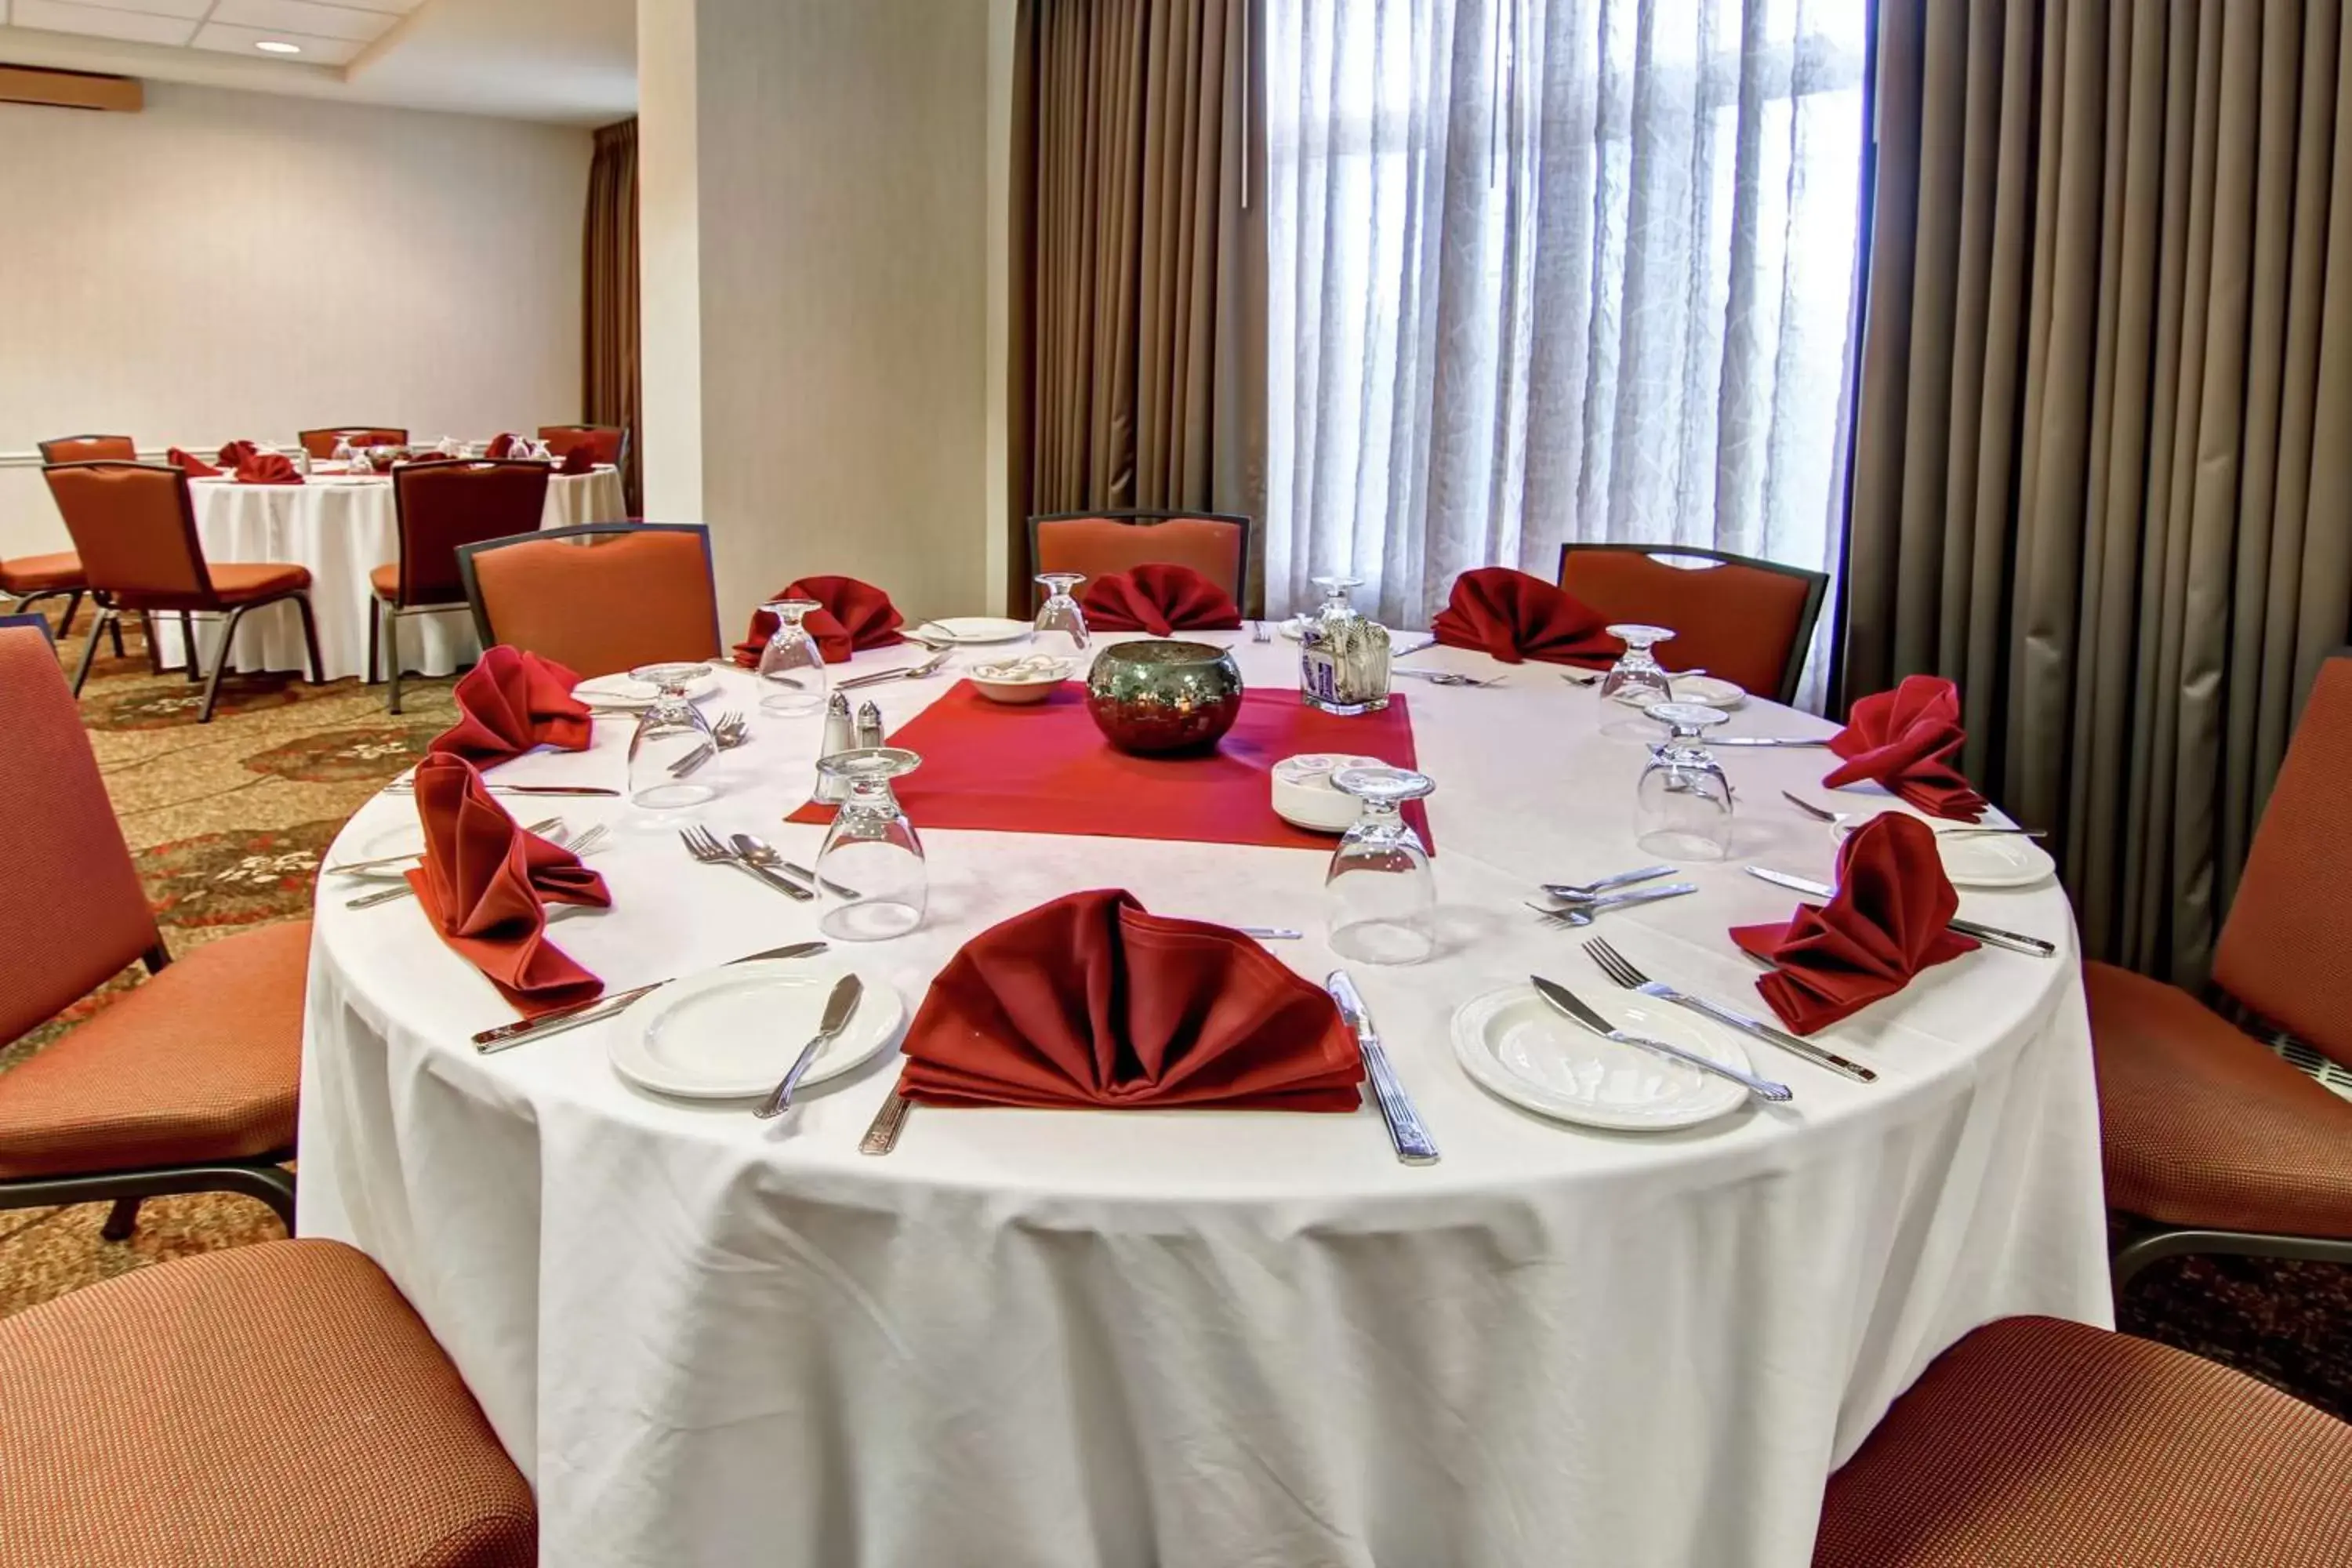 Meeting/conference room, Banquet Facilities in Hilton Garden Inn Calgary Airport